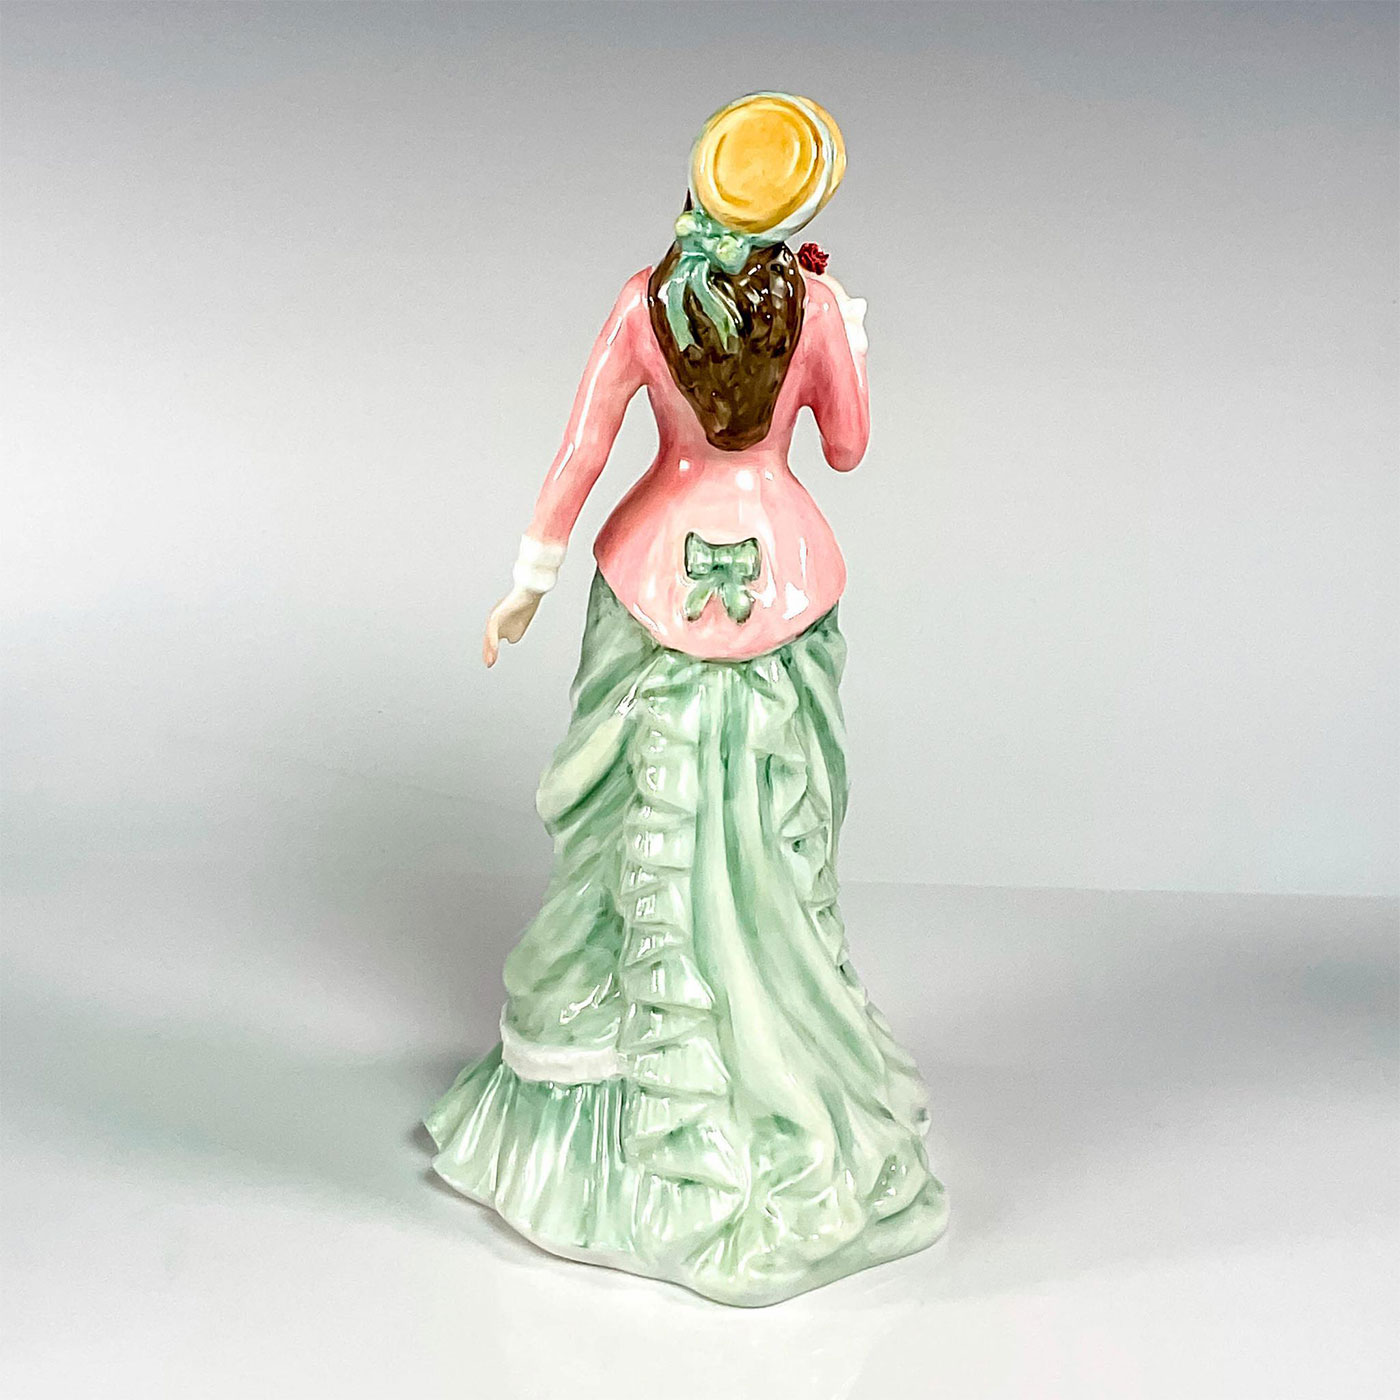 Sally HN4160 - Royal Doulton Figurine - Image 2 of 3